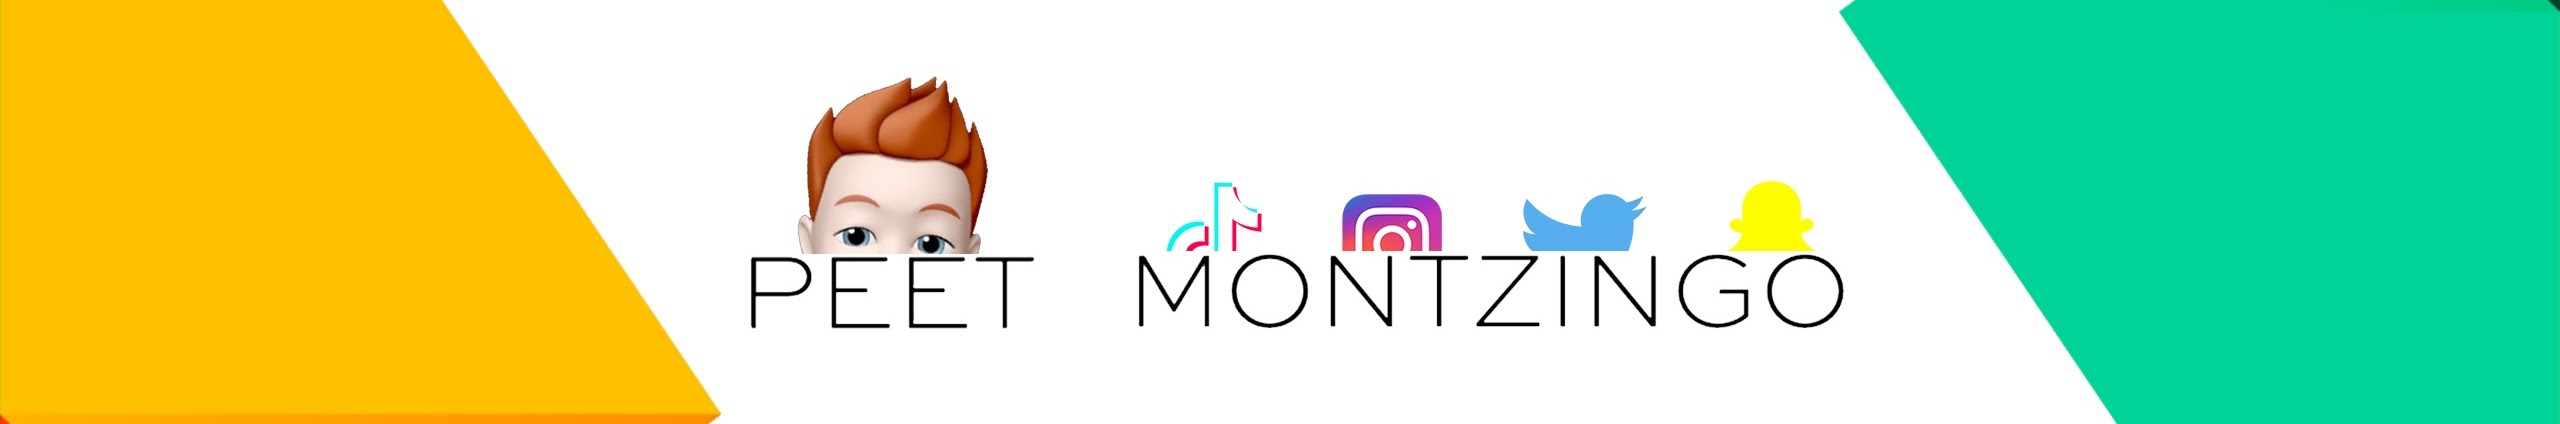 Peet_Montzingo_banner